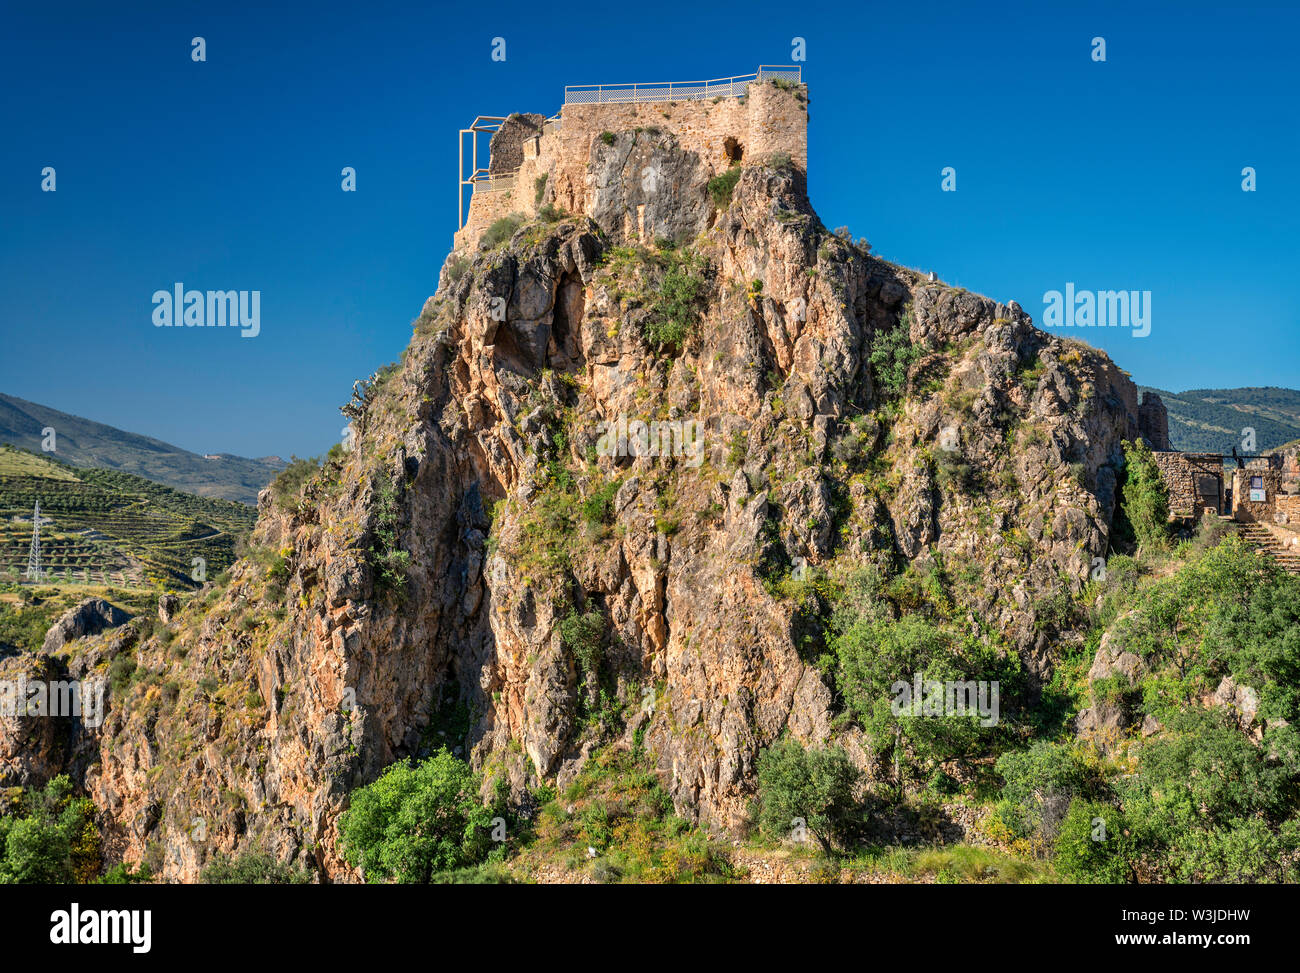 Ruined medieval castle on top of rock in Lanjaron, Las Alpujarras, Granada province, Andalusia, Spain Stock Photo